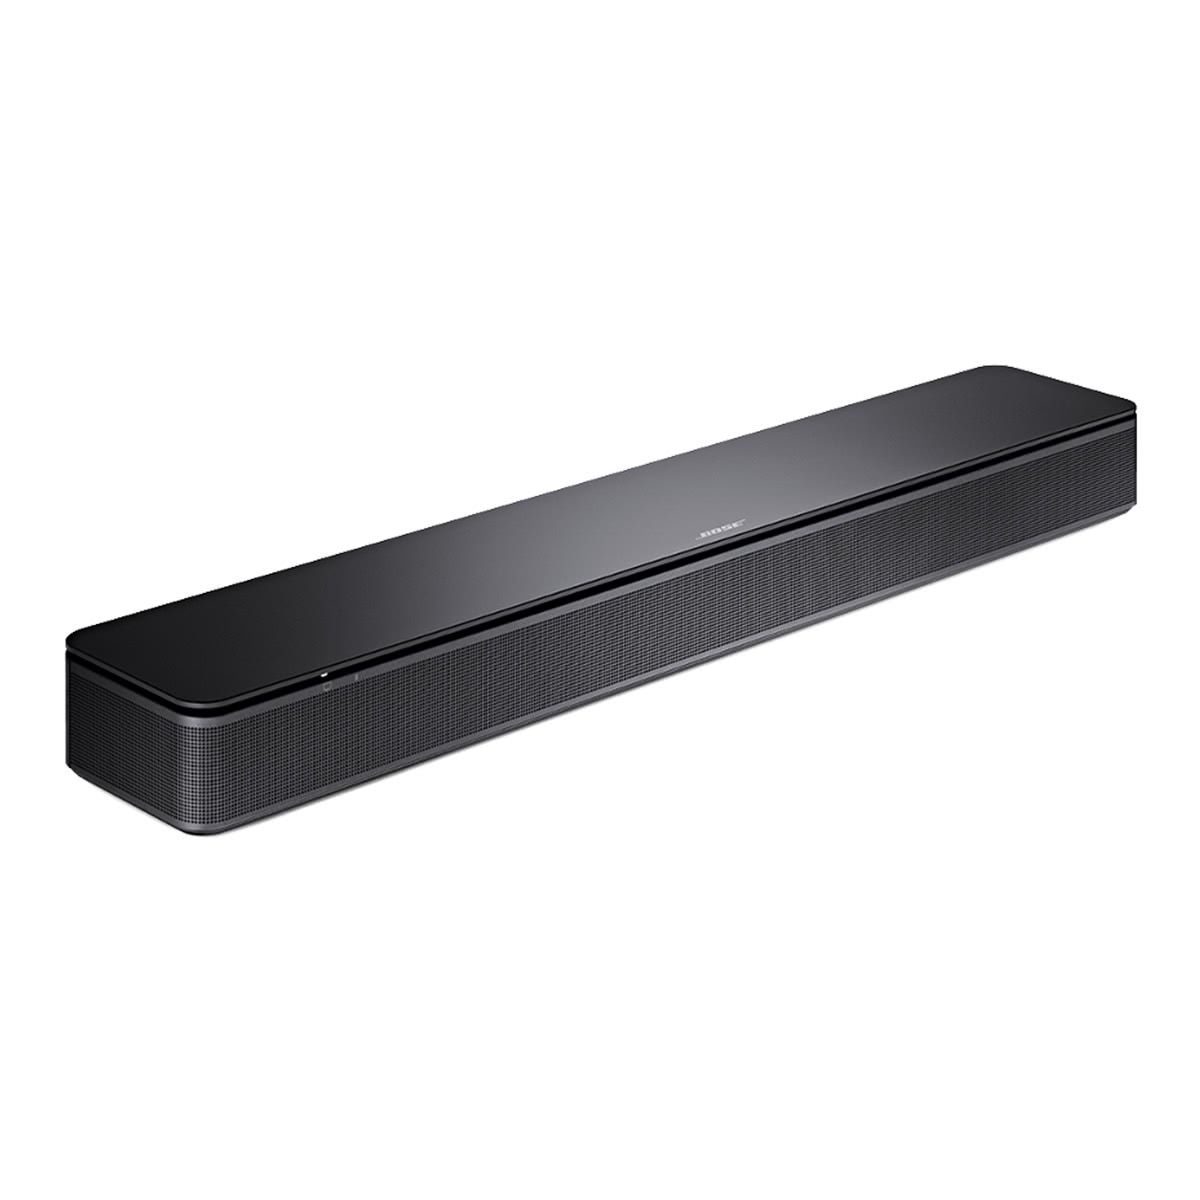 Bose TV Speaker Surround Sound Wireless Bluetooth Soundbar for TV, Black - image 1 of 4